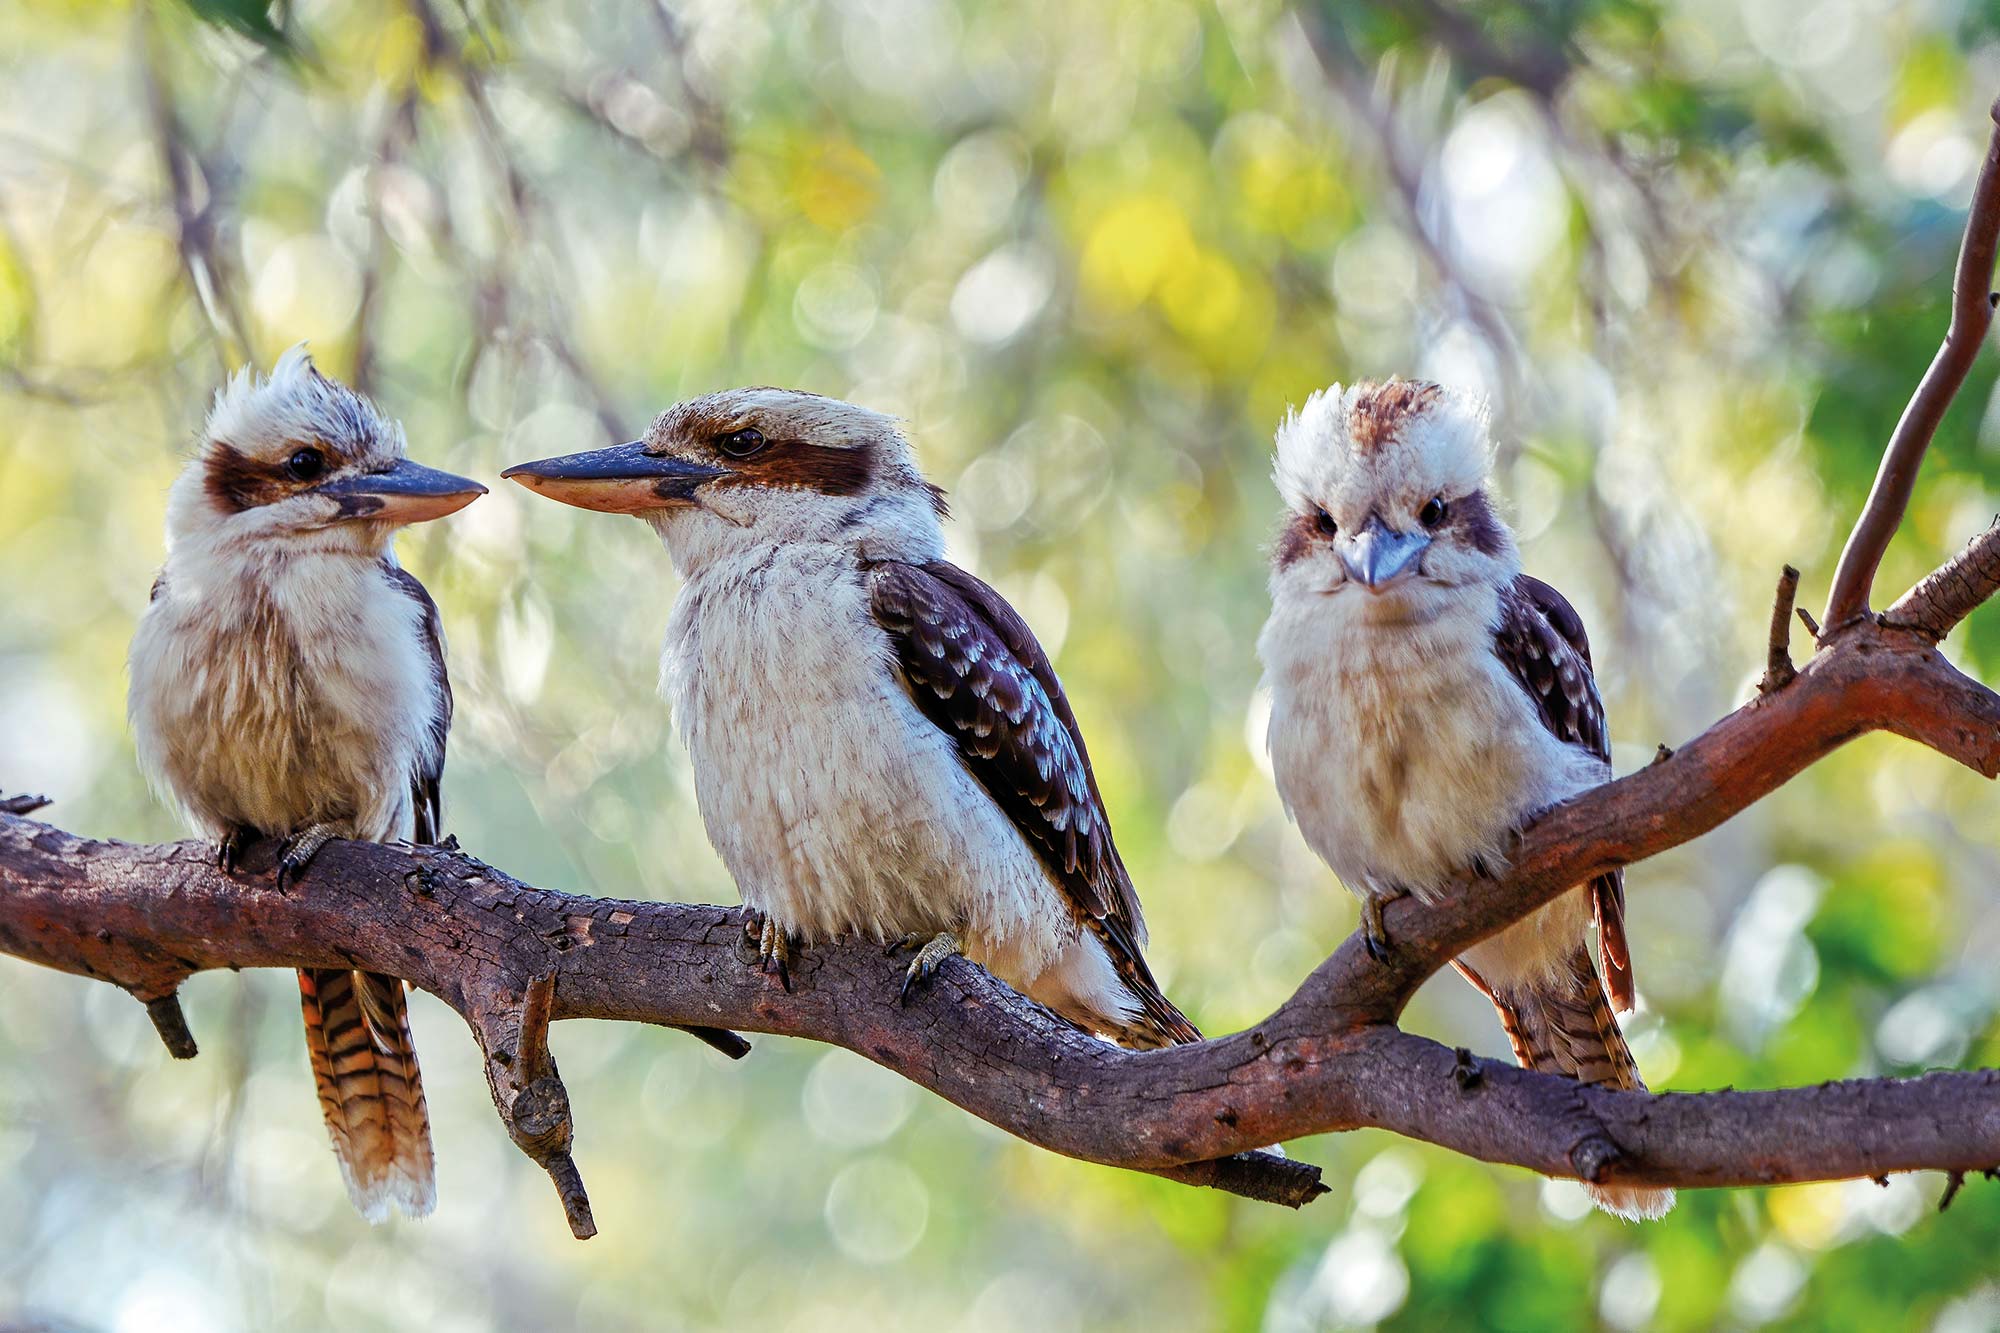 The Falls Estate - kookaburras in a tree